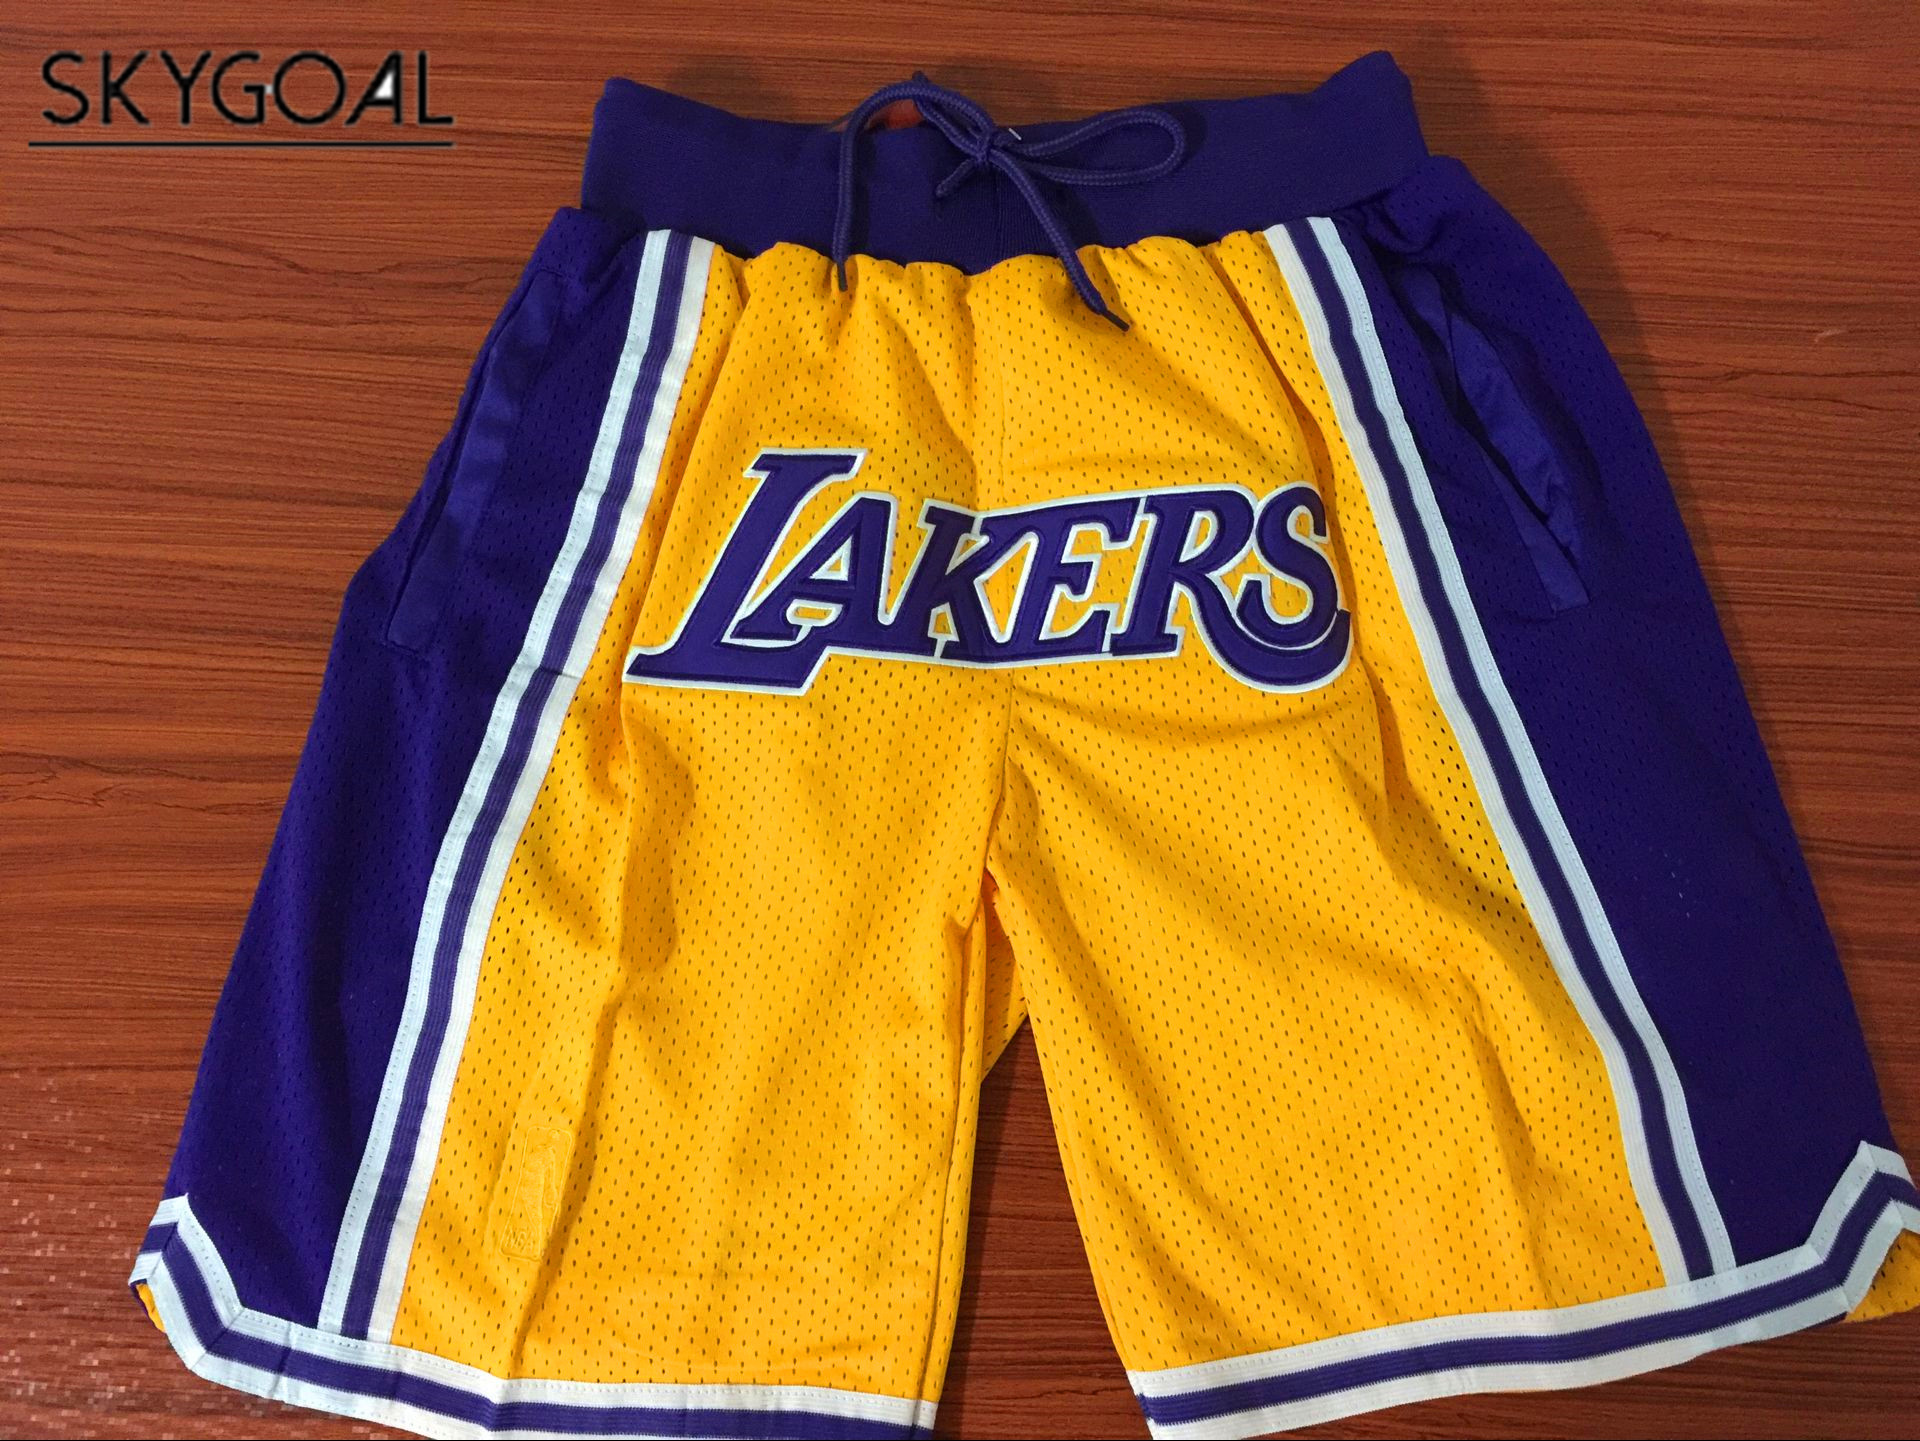 Pantalones La Lakers Just Don